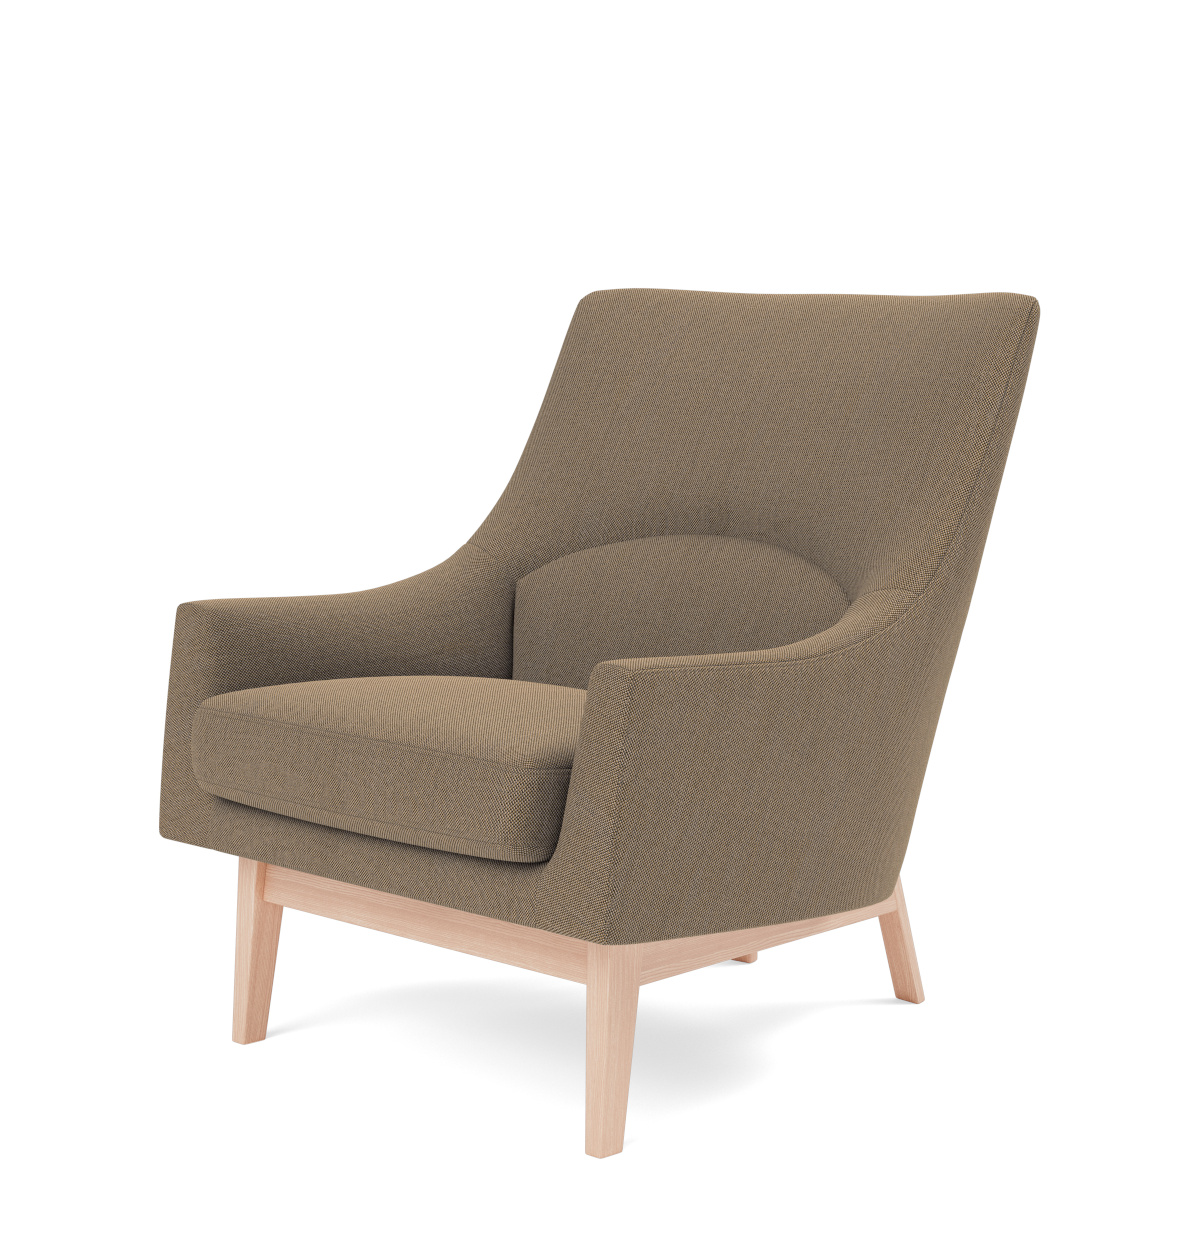 A-Chair Wood Base, walnuss lackiert / loop 33